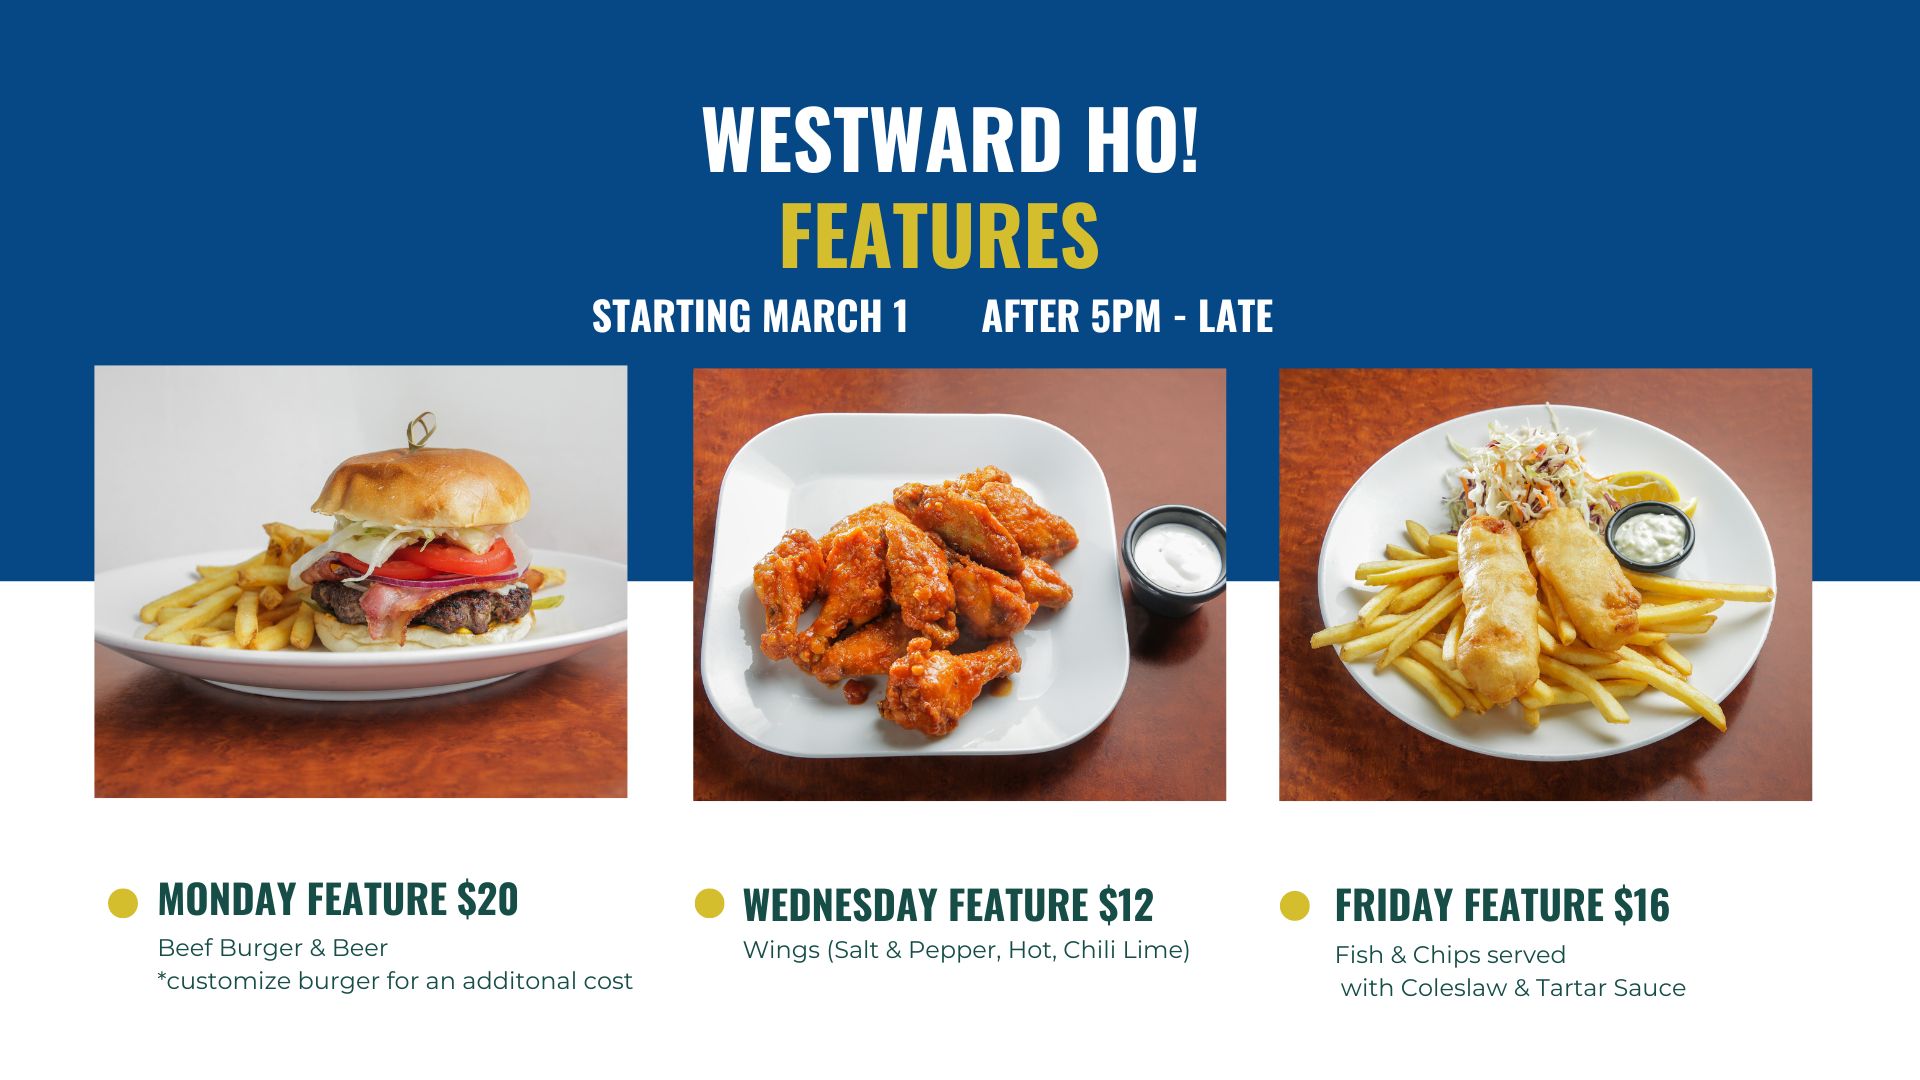 WestwardHo! Features